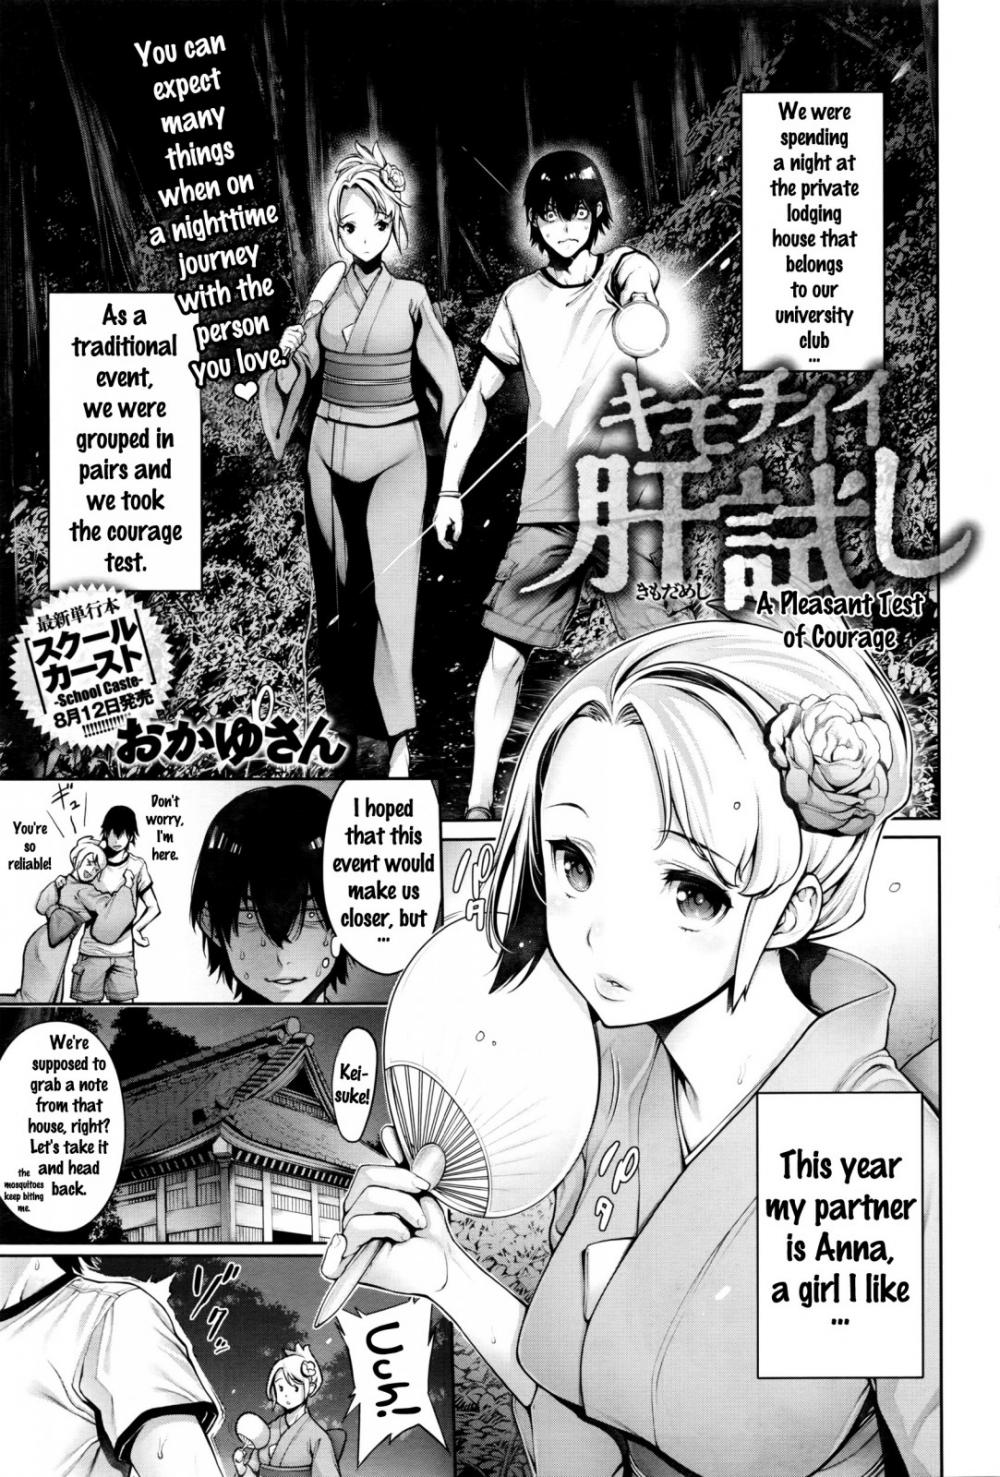 Hentai Manga Comic-A pleasant test of courage-Read-1